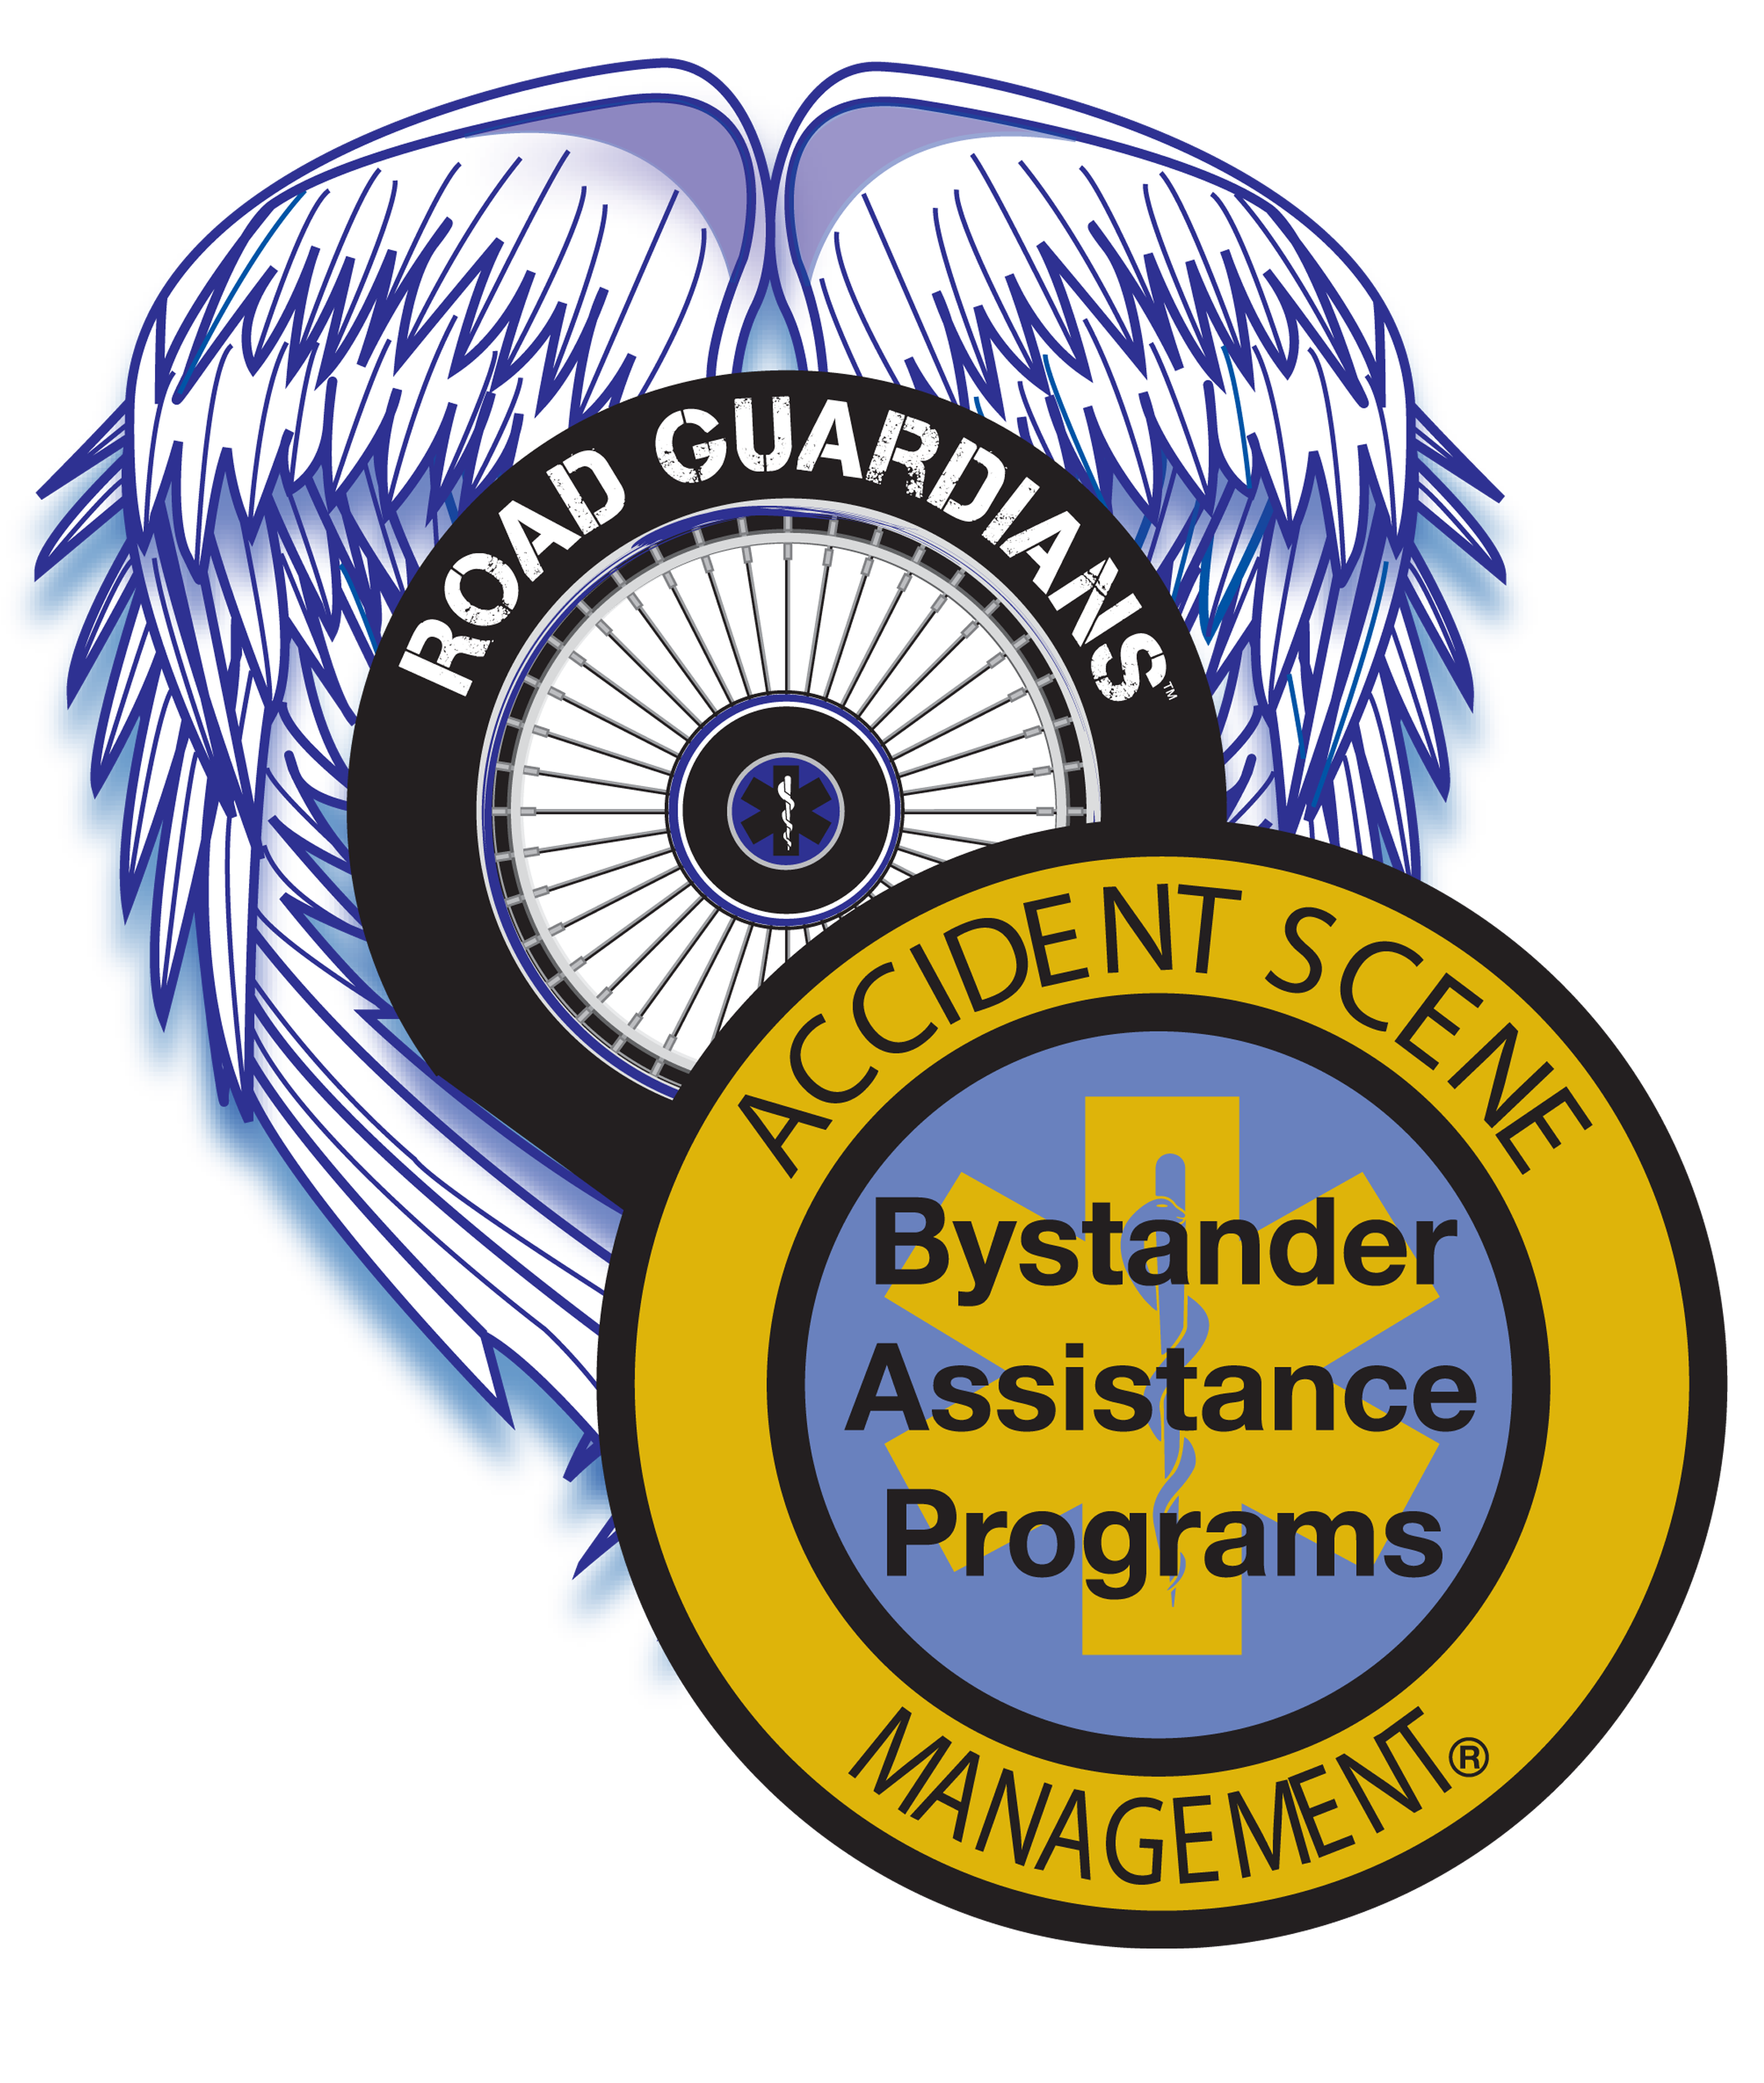 Accident Scene Management Classes Return in July 2021.